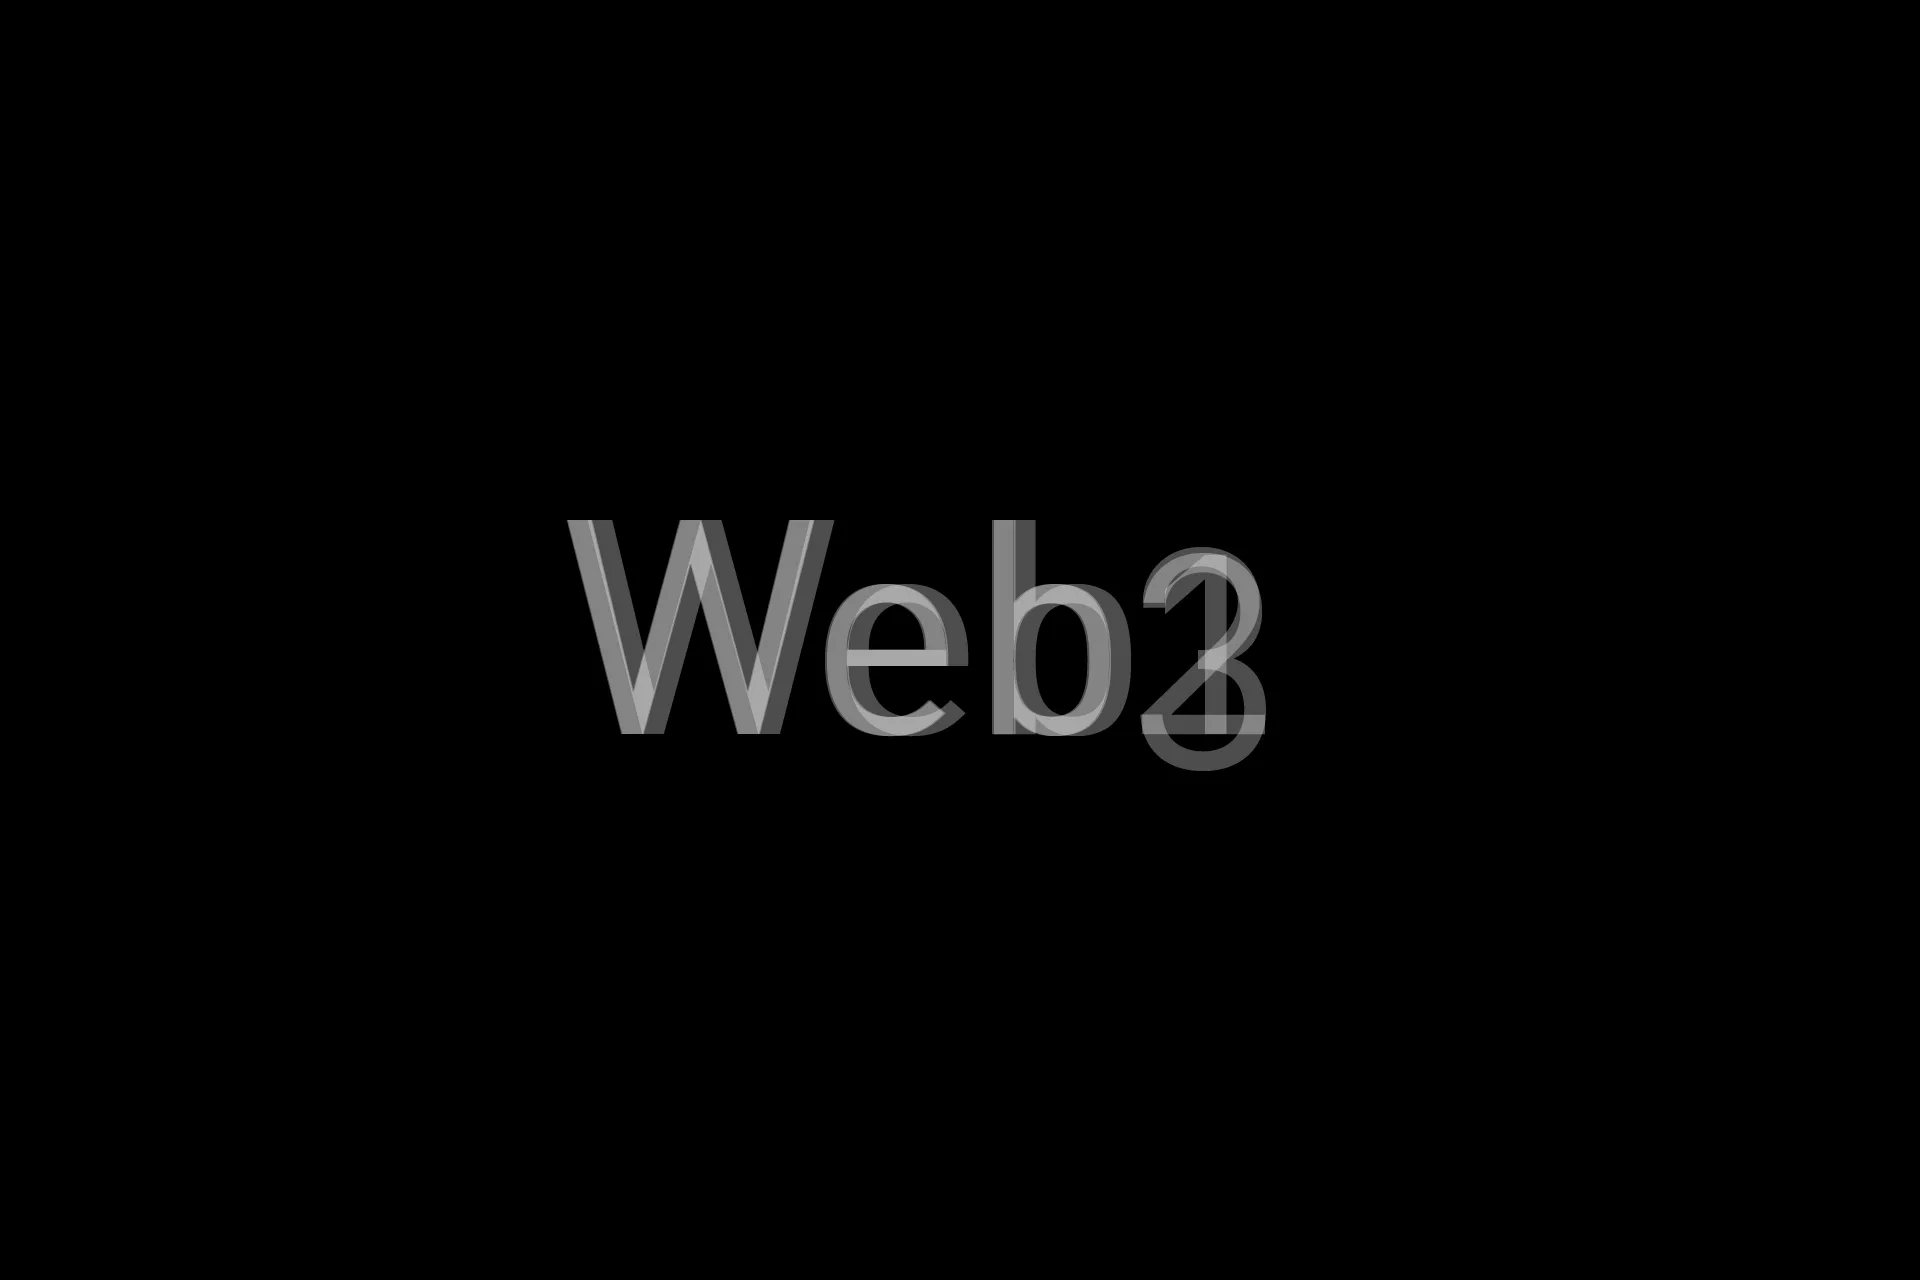 web1,2,3